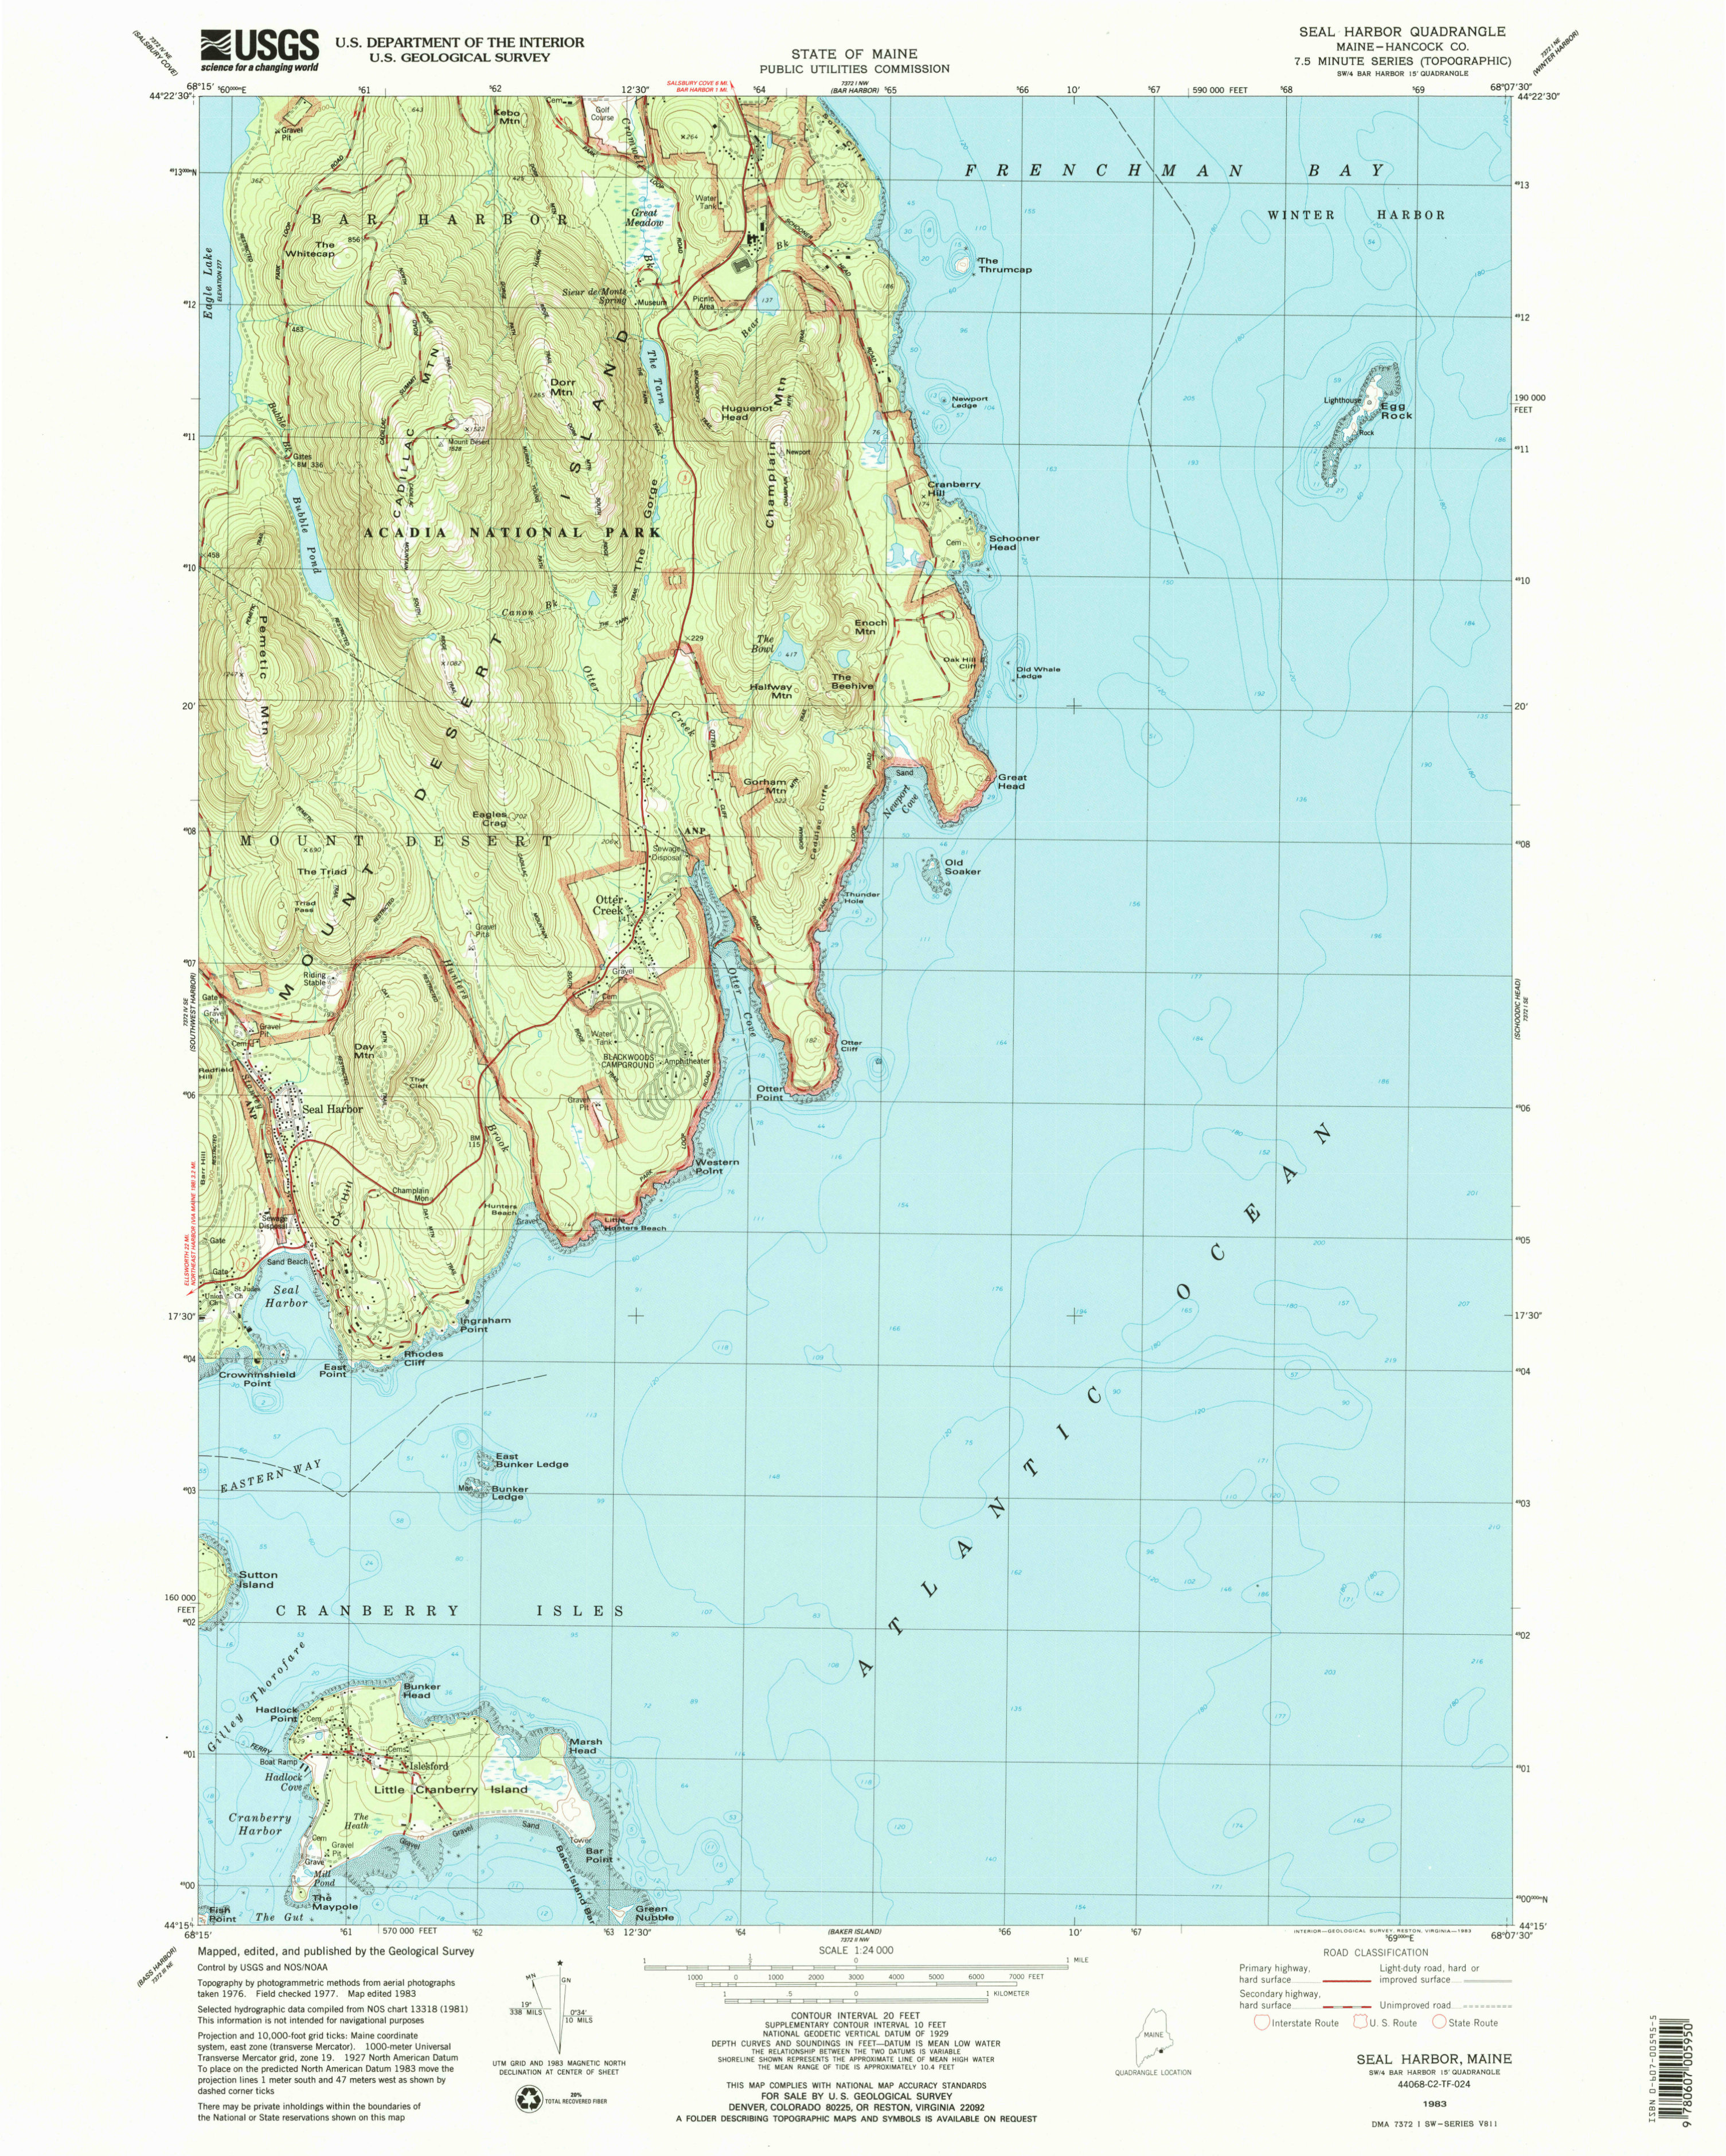 Acadia Maps Npmaps Com Just Free Maps Period